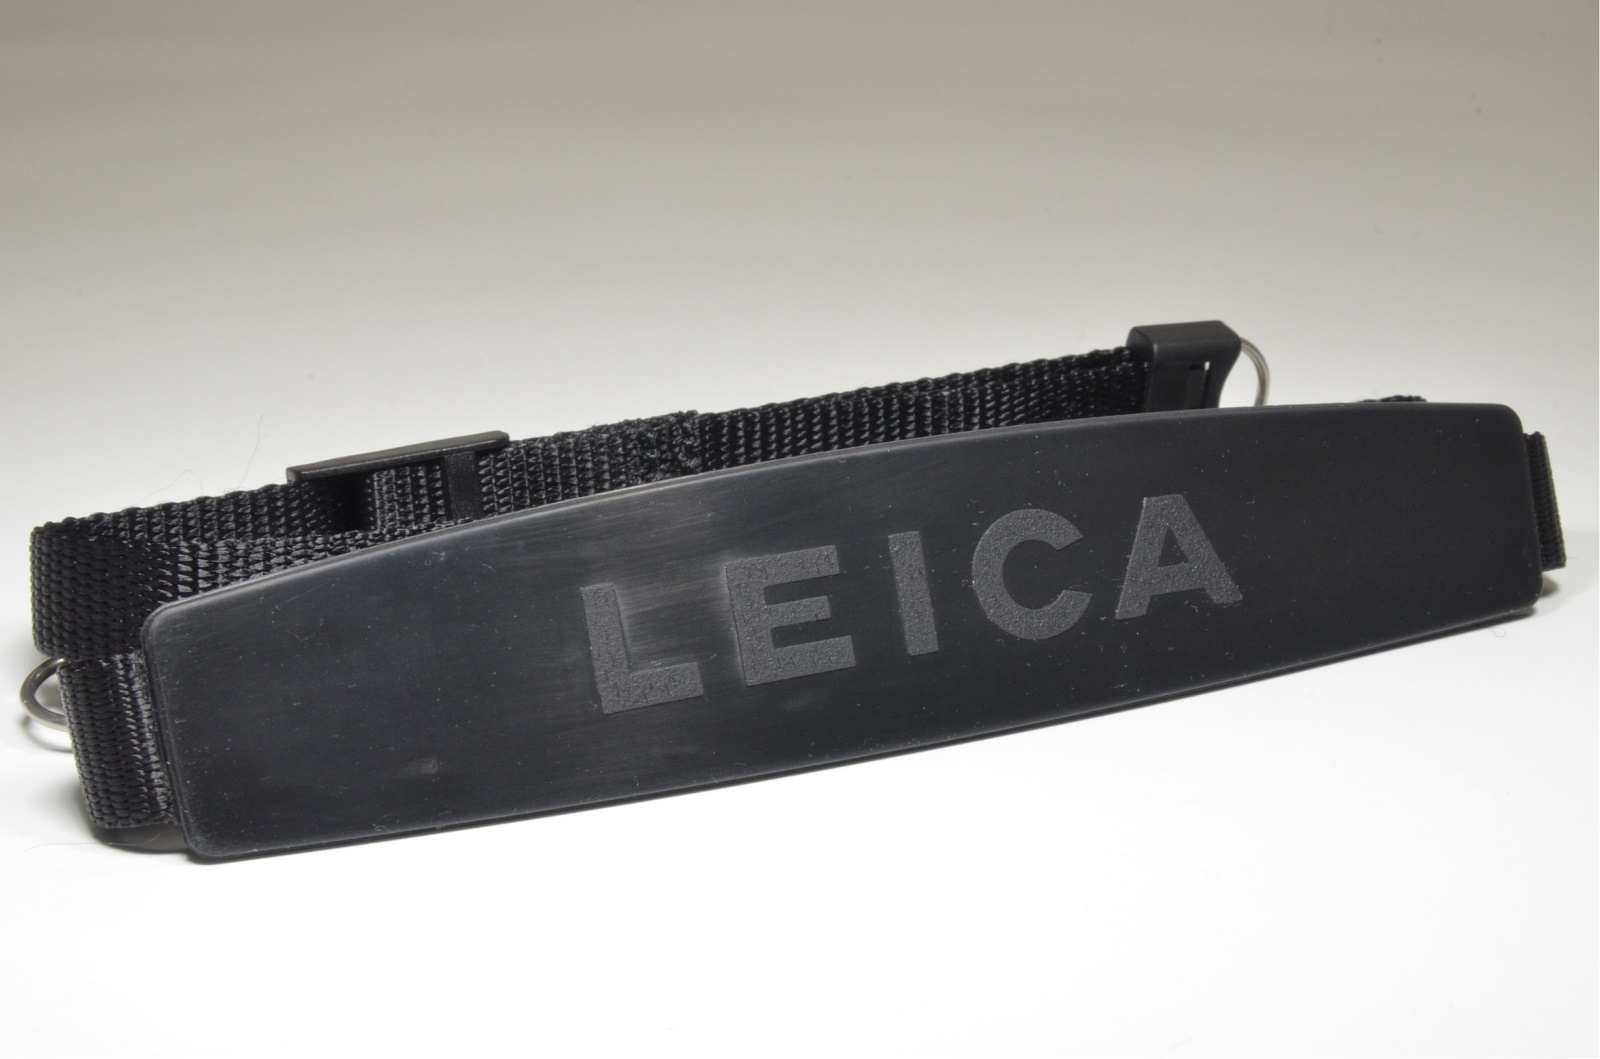 leica m6 0.72 black rangefinder no.1658937 year 1984 the camera cla'd recently